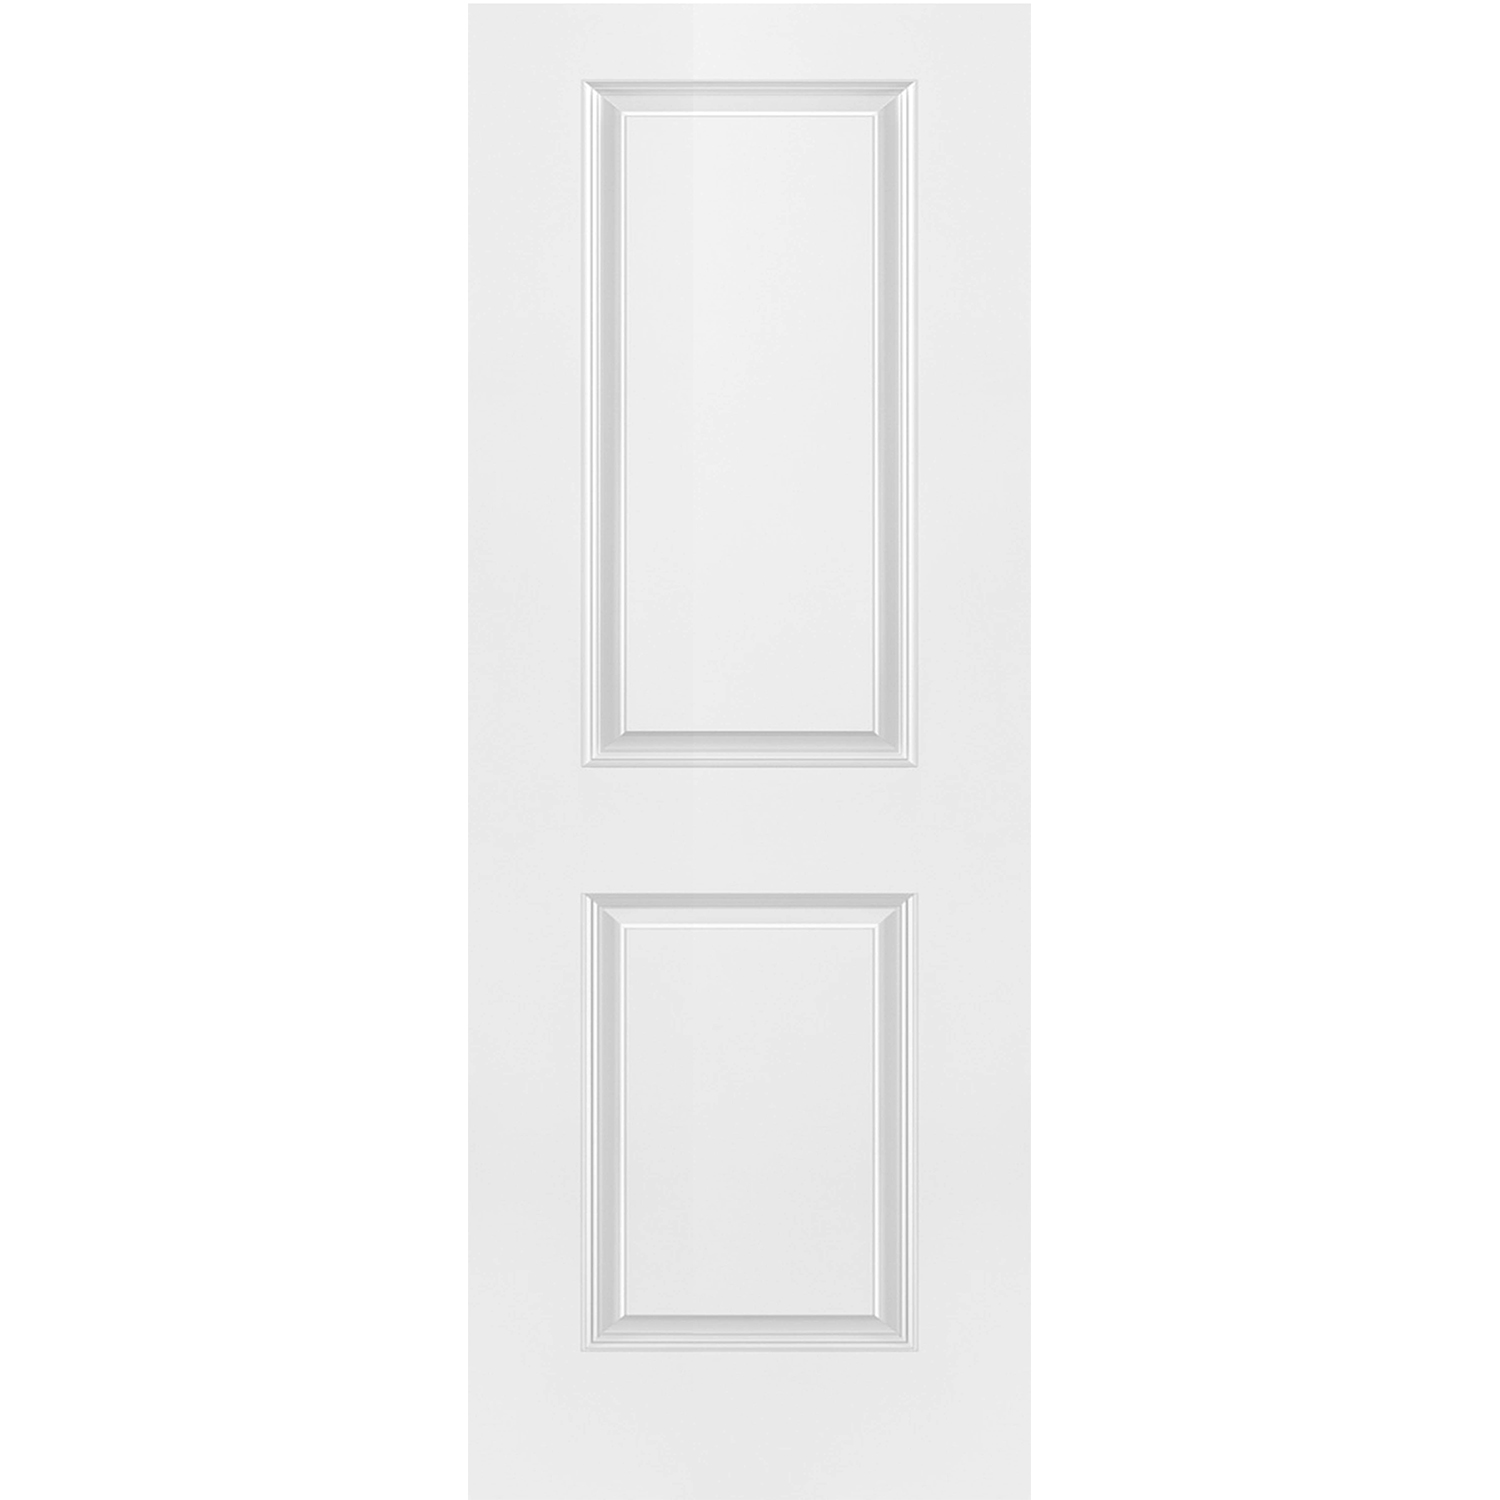 2 Panel 80 x 30 x 1-3/8 Smooth Hollow Door Raised